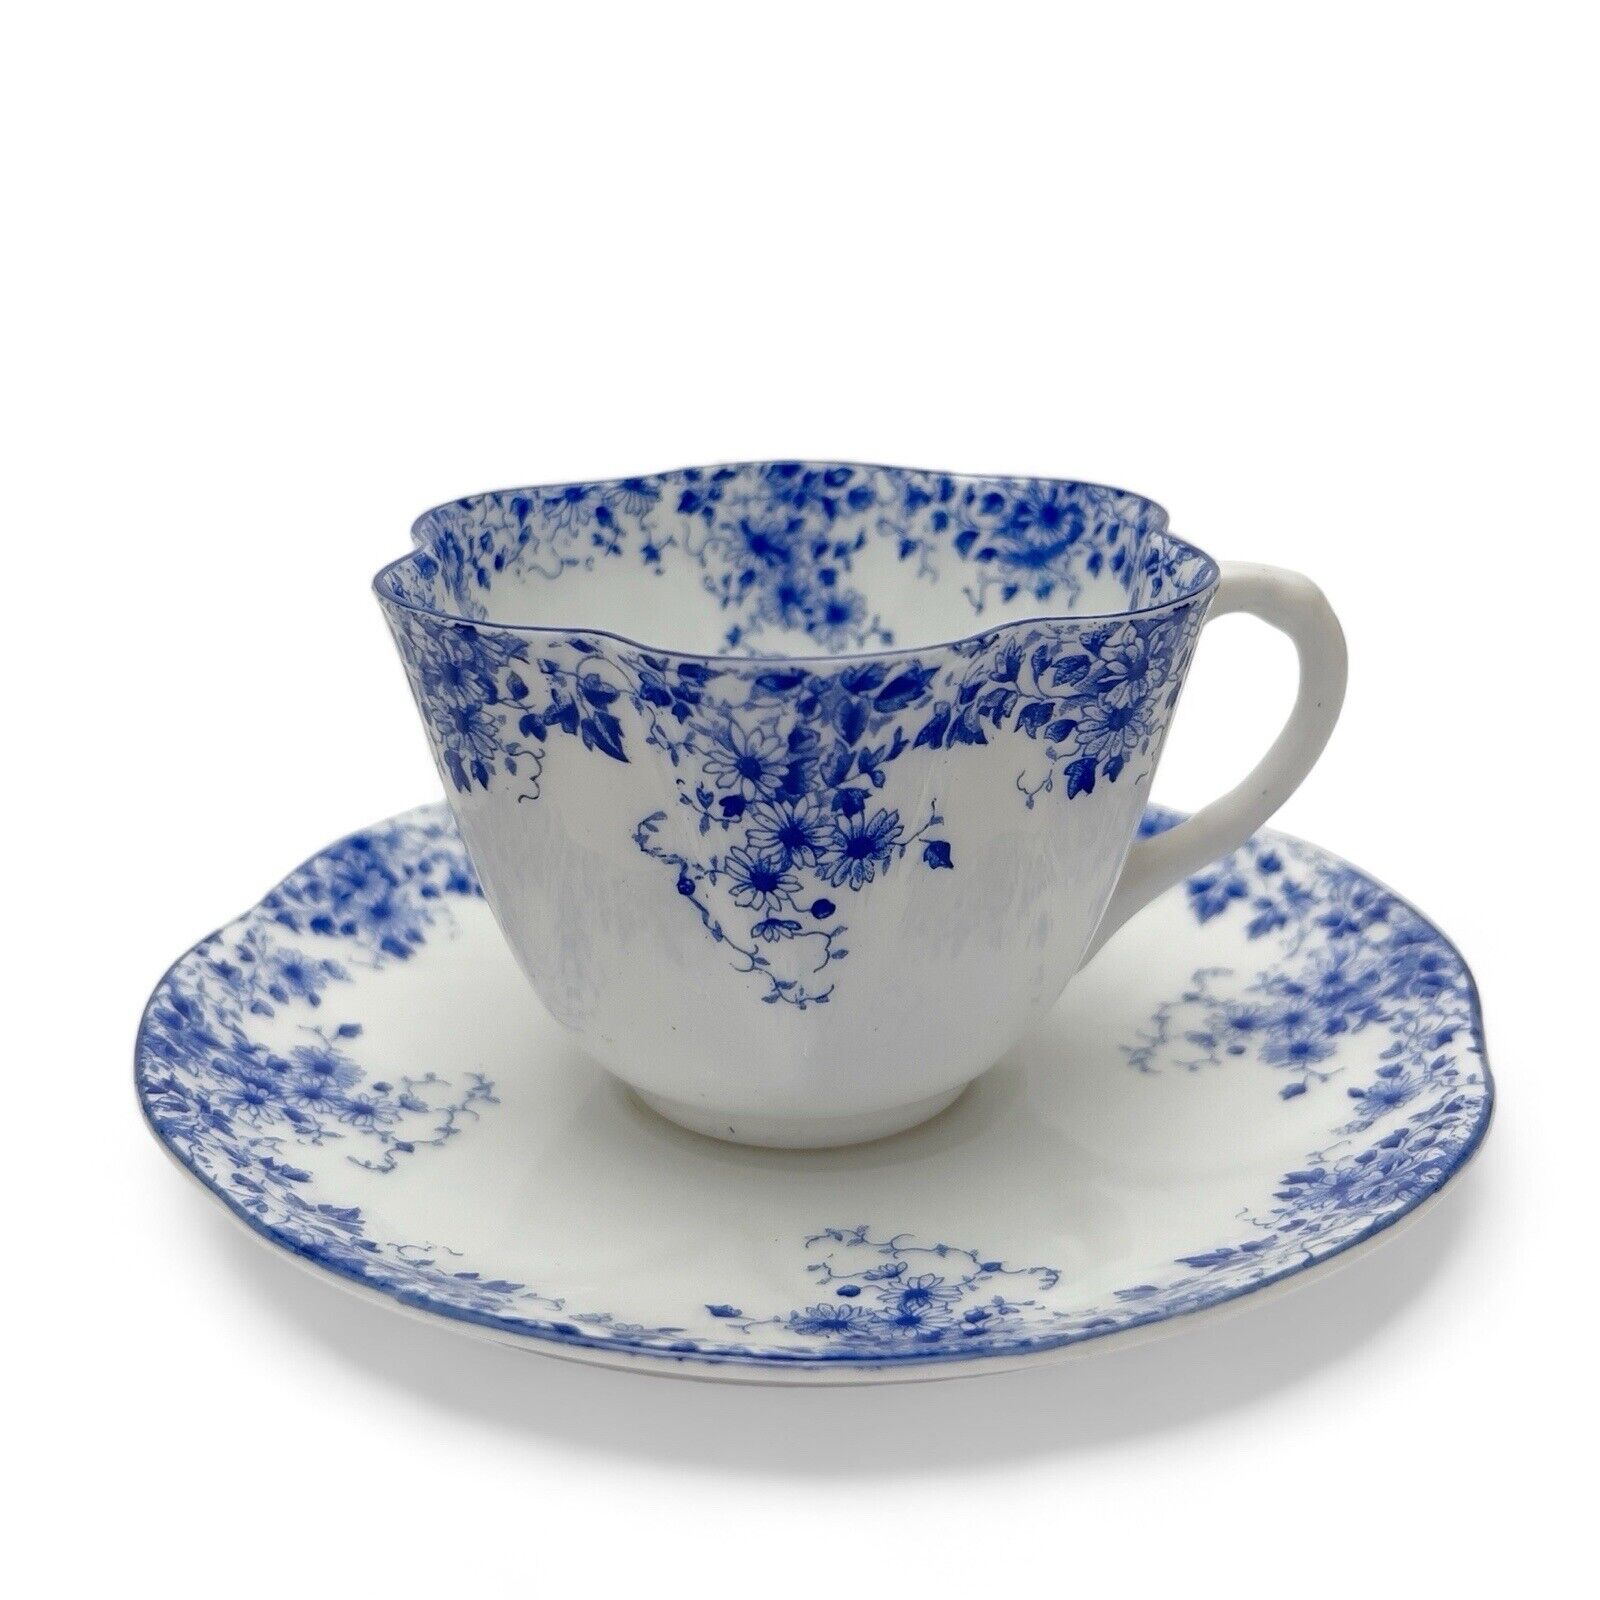 Vintage Shelley England Dainty Blue Floral Teacup & Saucer Bone China